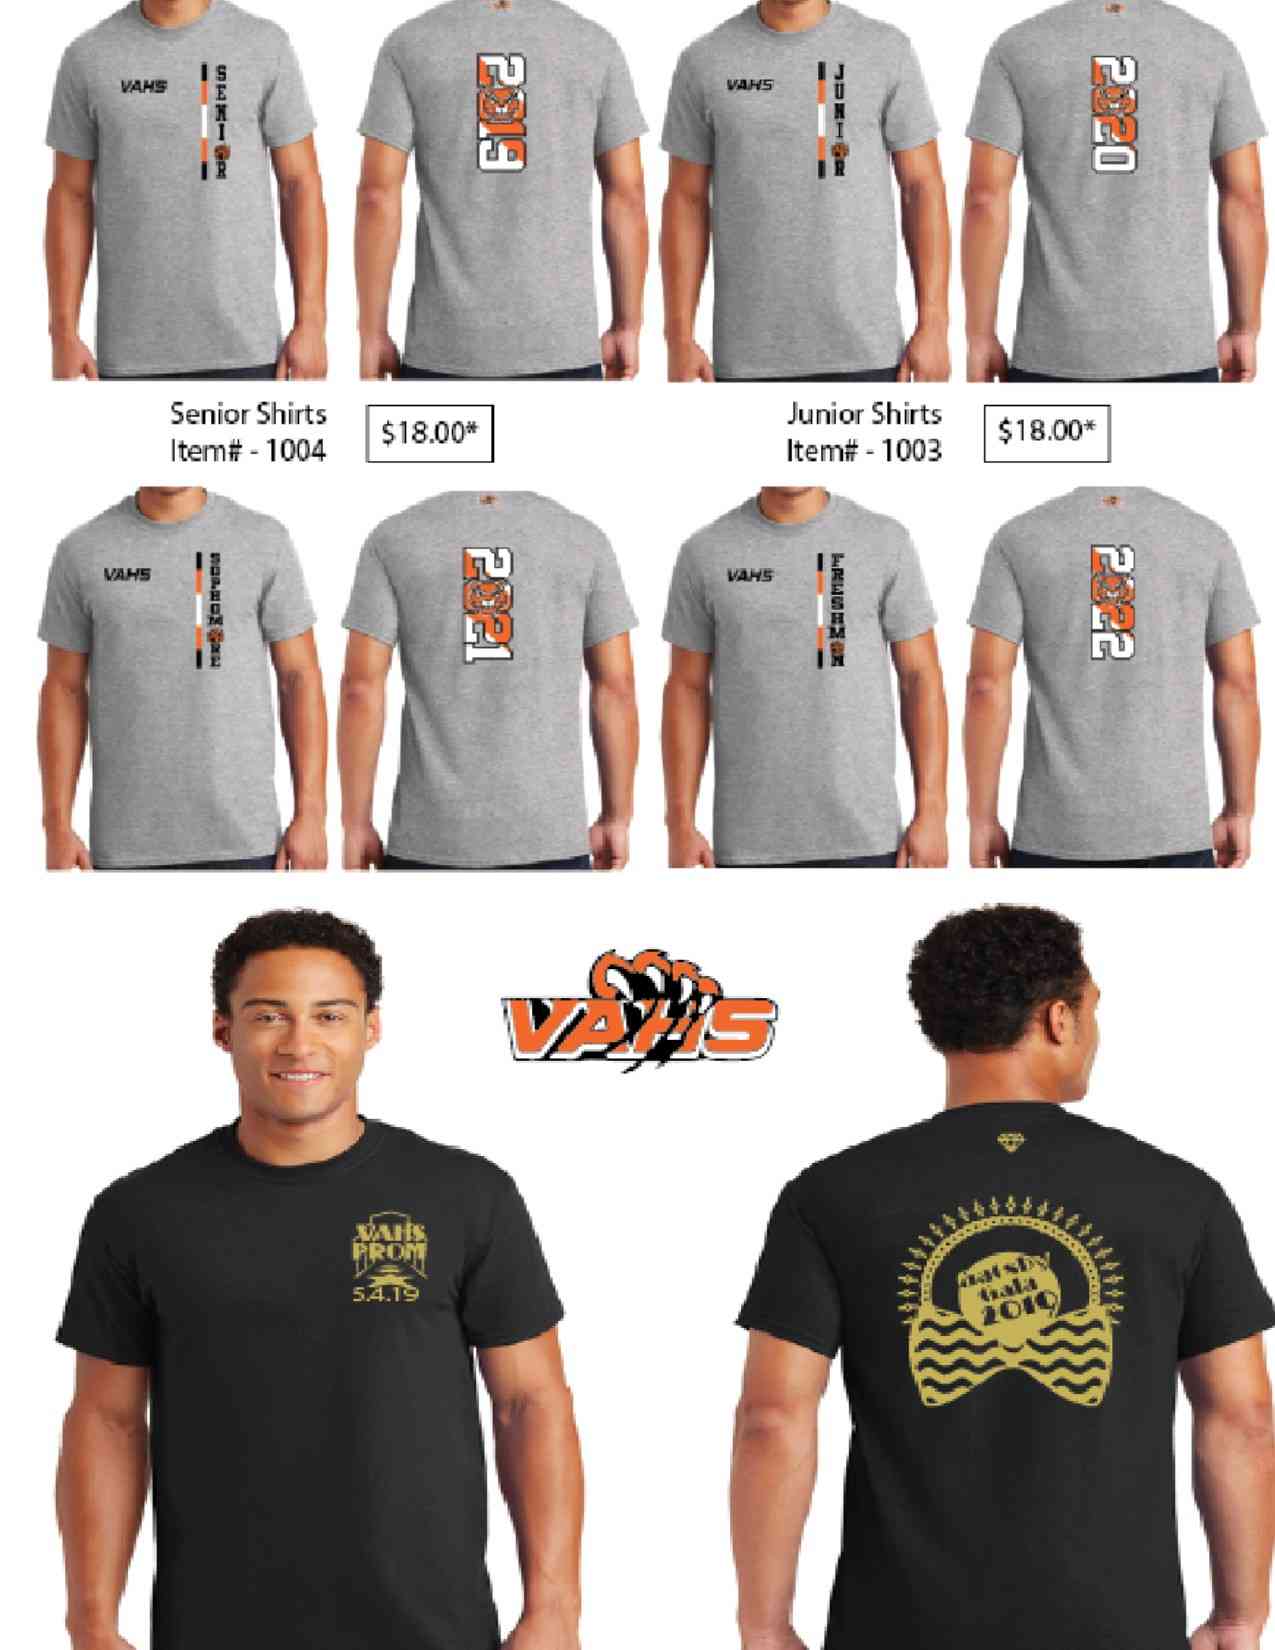 VAHS Class of 2019 T-Shirt Image